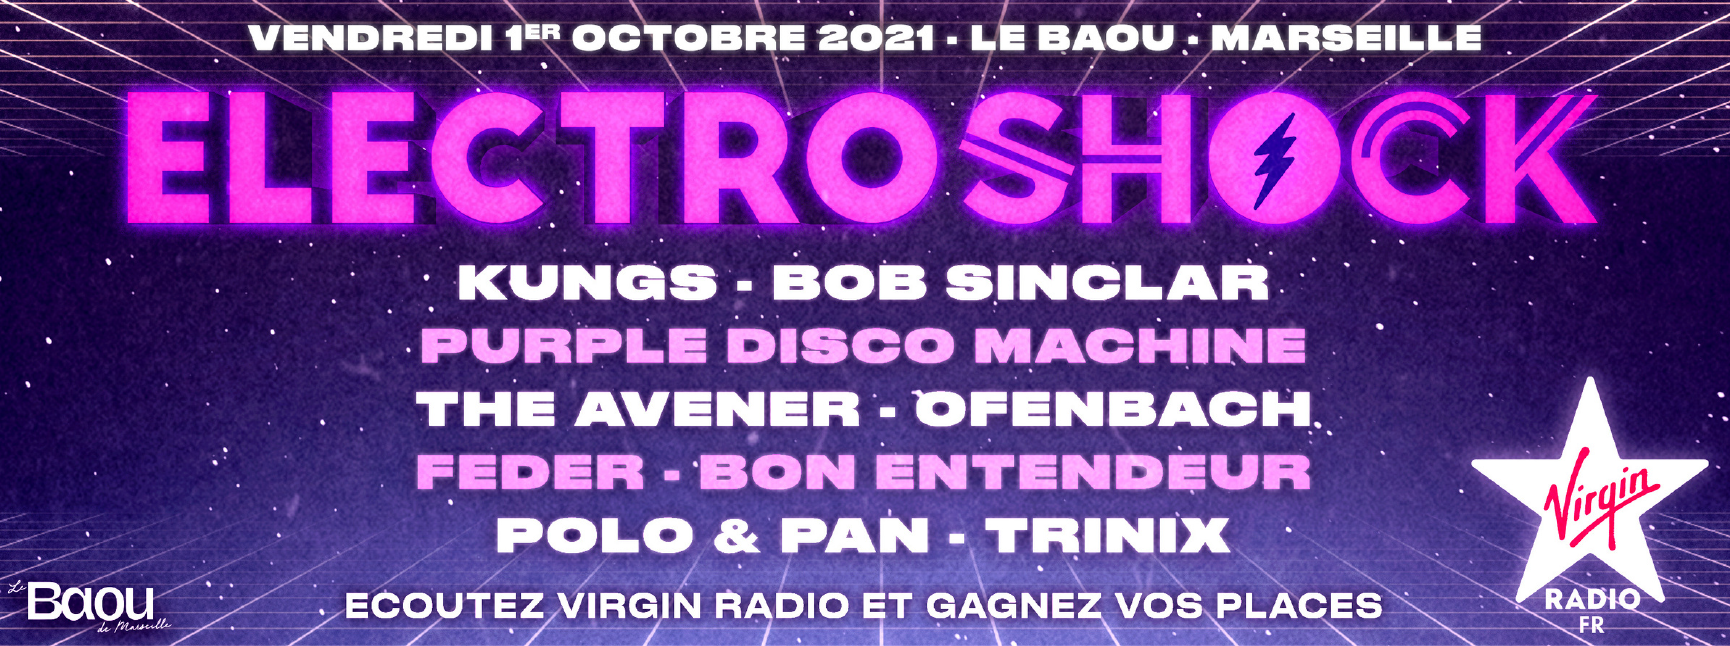 Virgin Radio : un Electroshock à Marseille